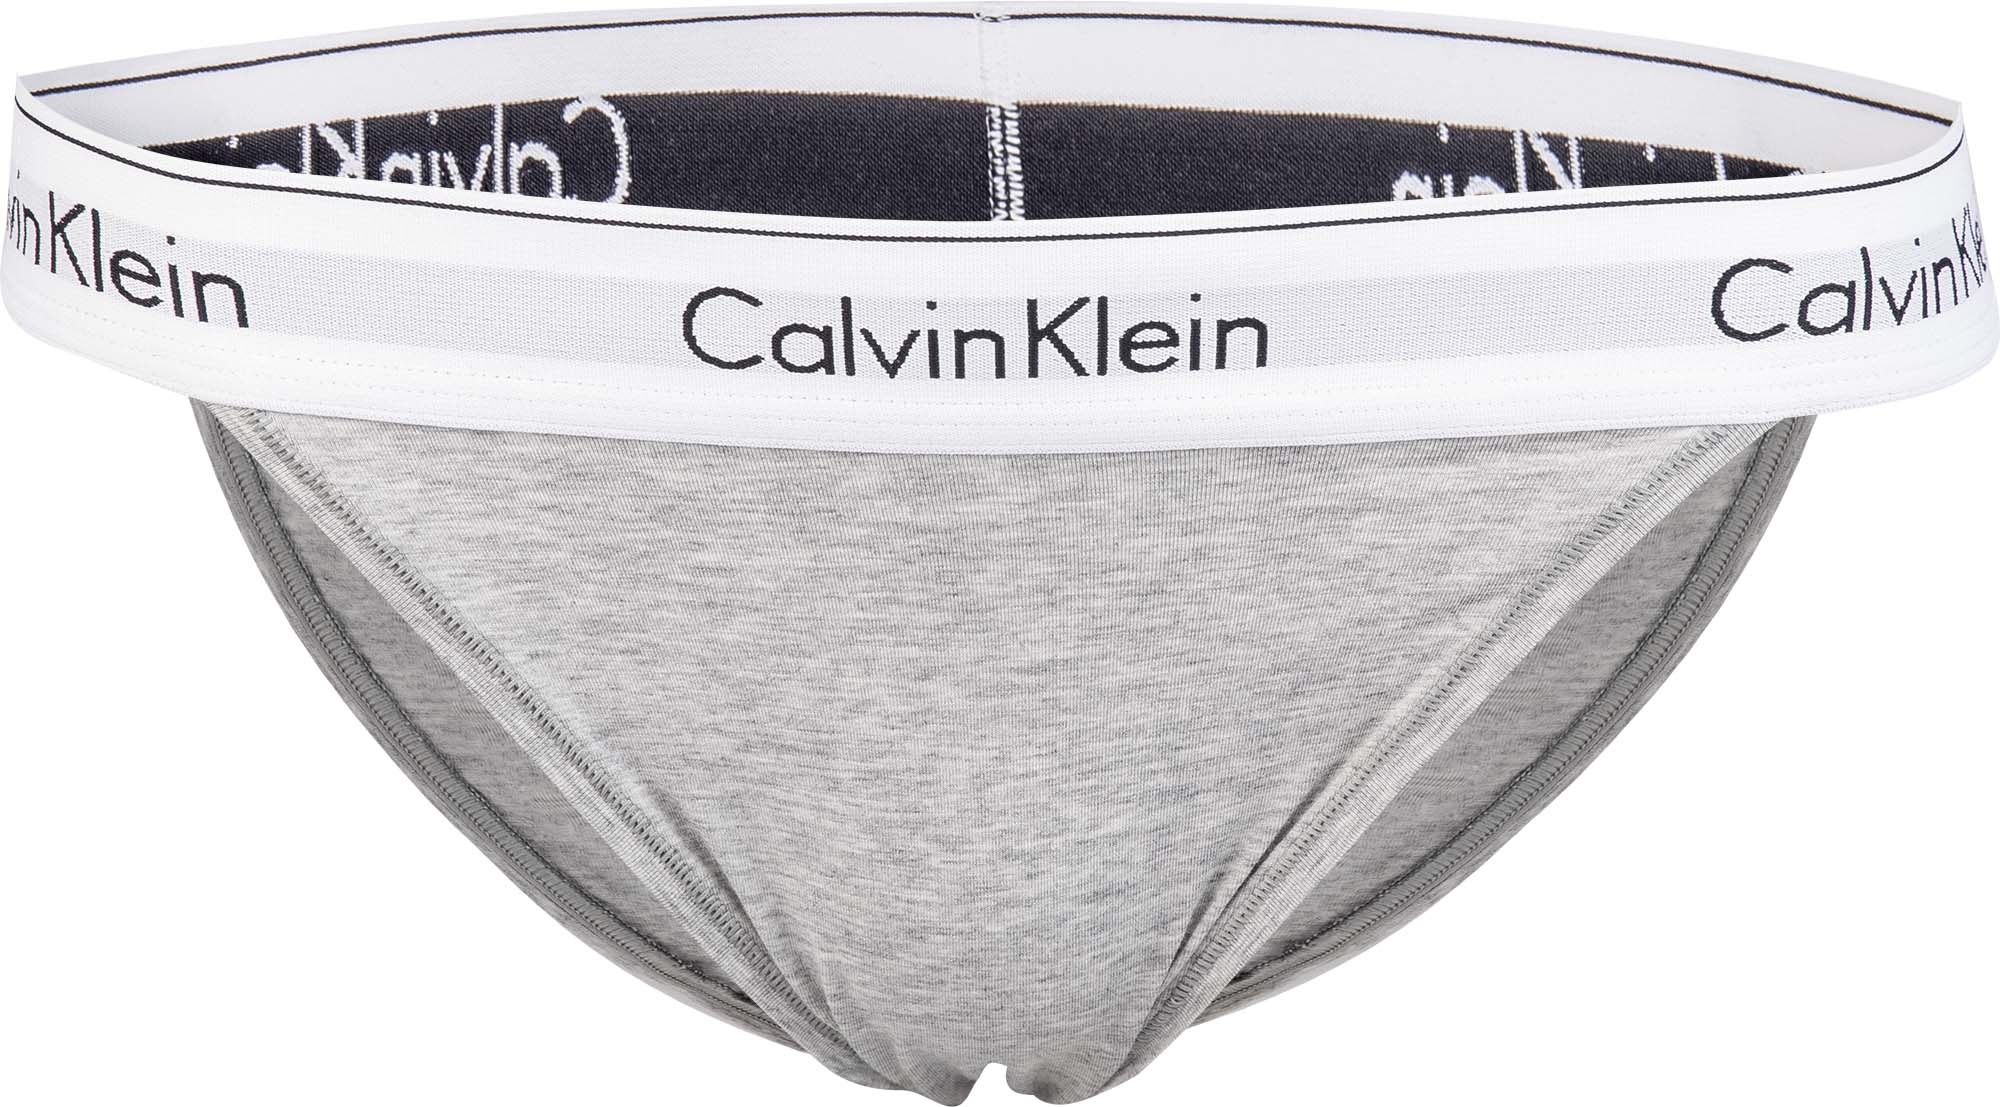 Calvin Klein High-Leg Tanga